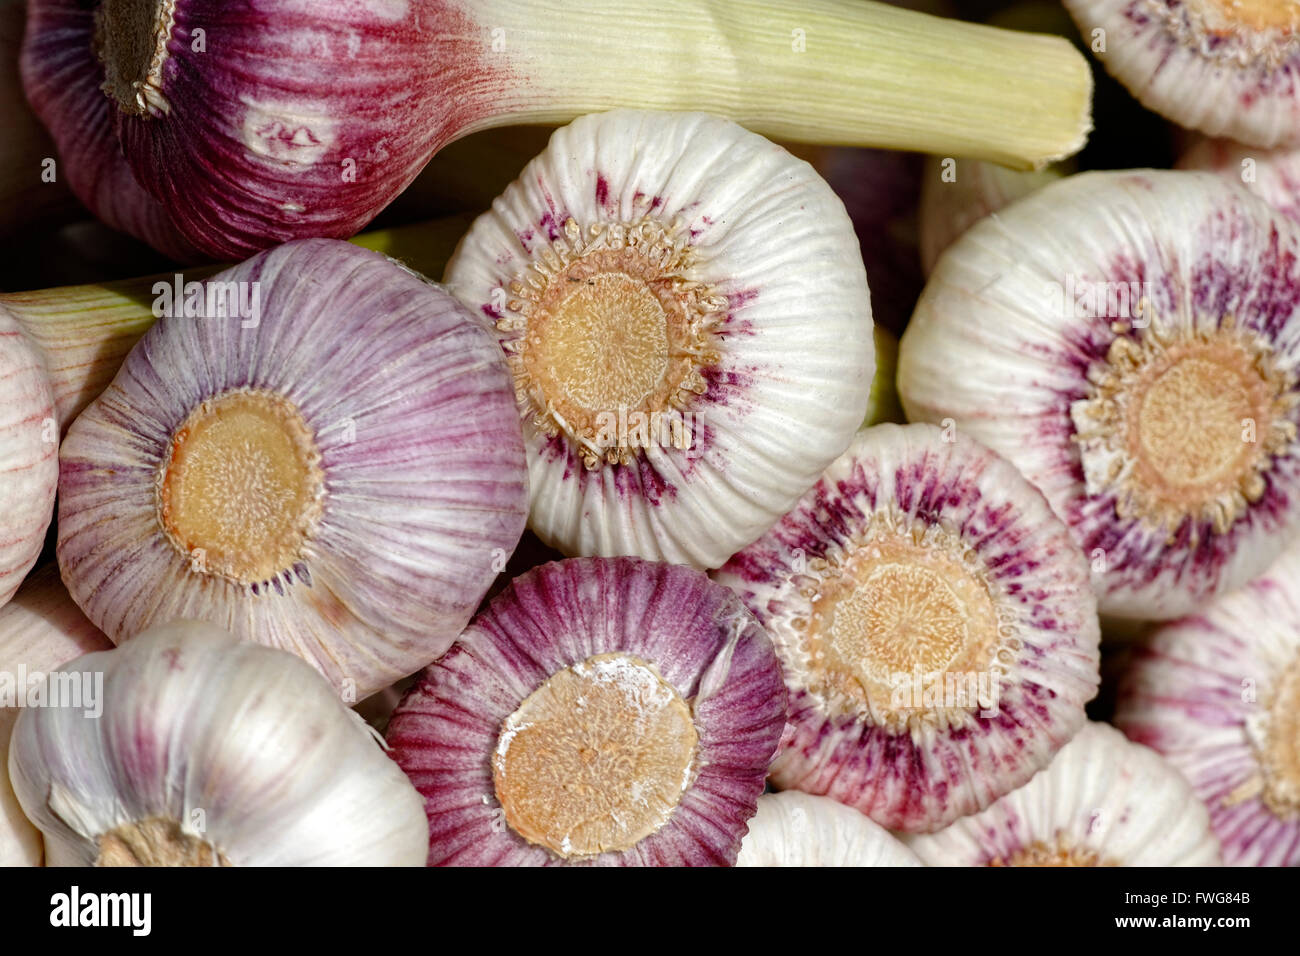 Garlic bulbs Stock Photo